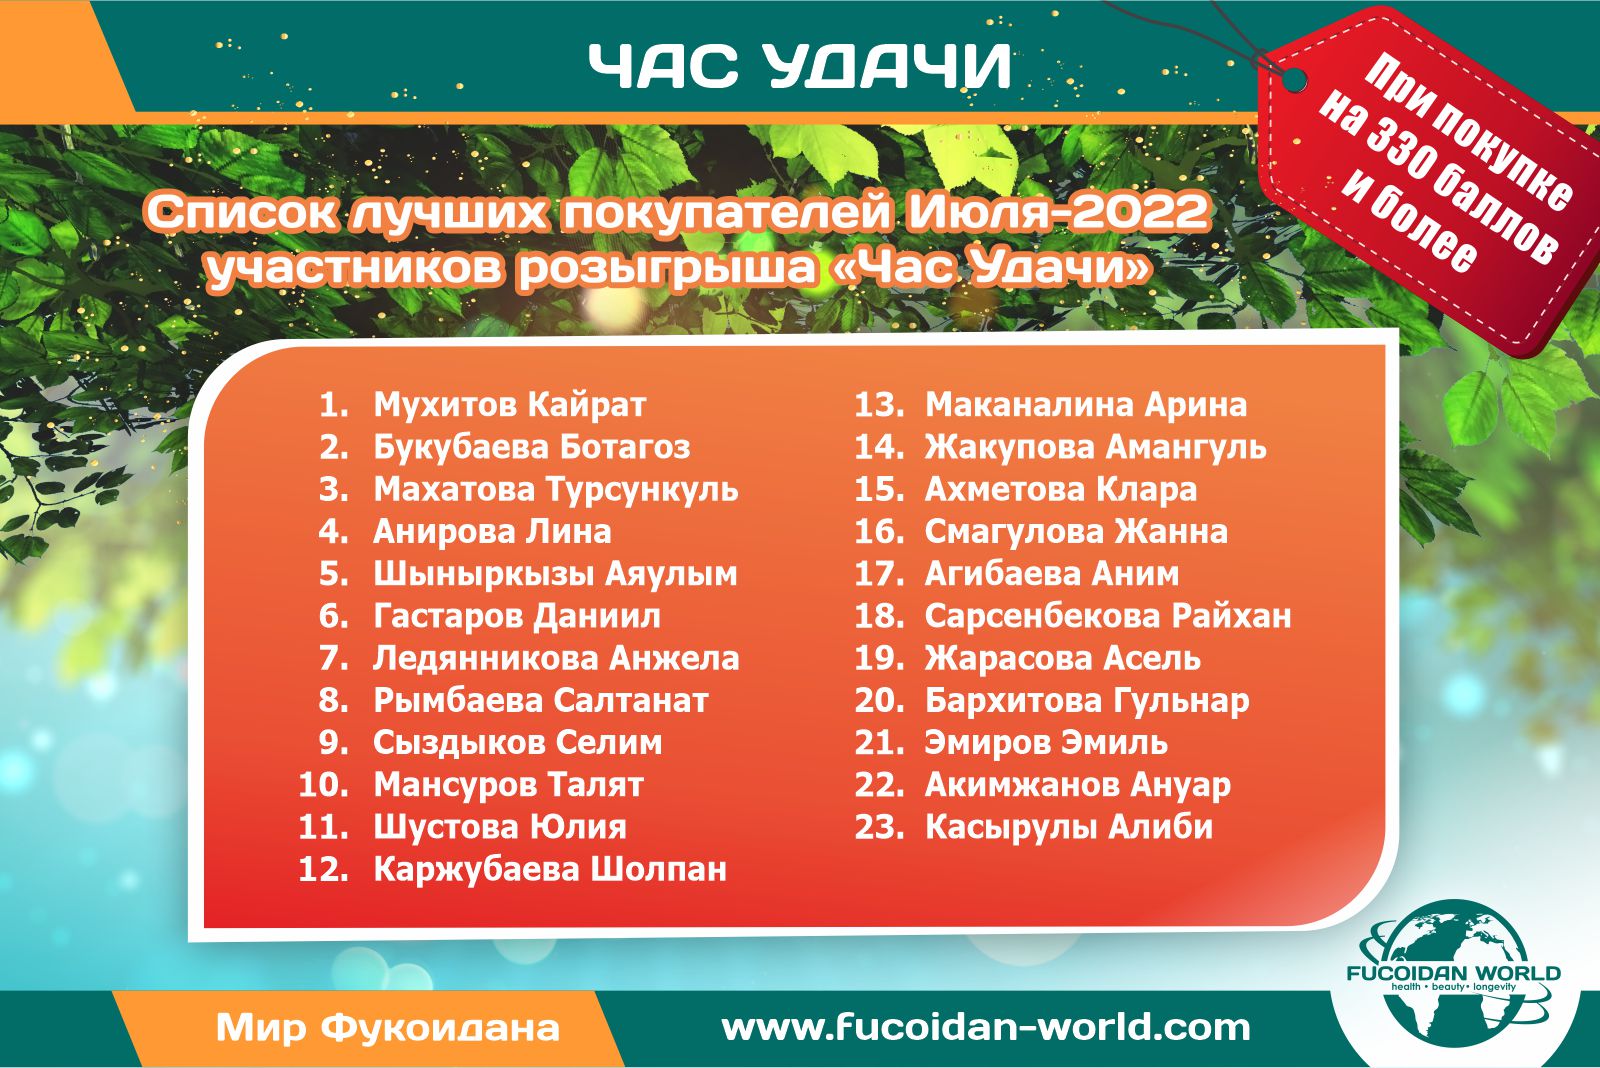 Участники розыгрыша Час Удачи за Июль-2022